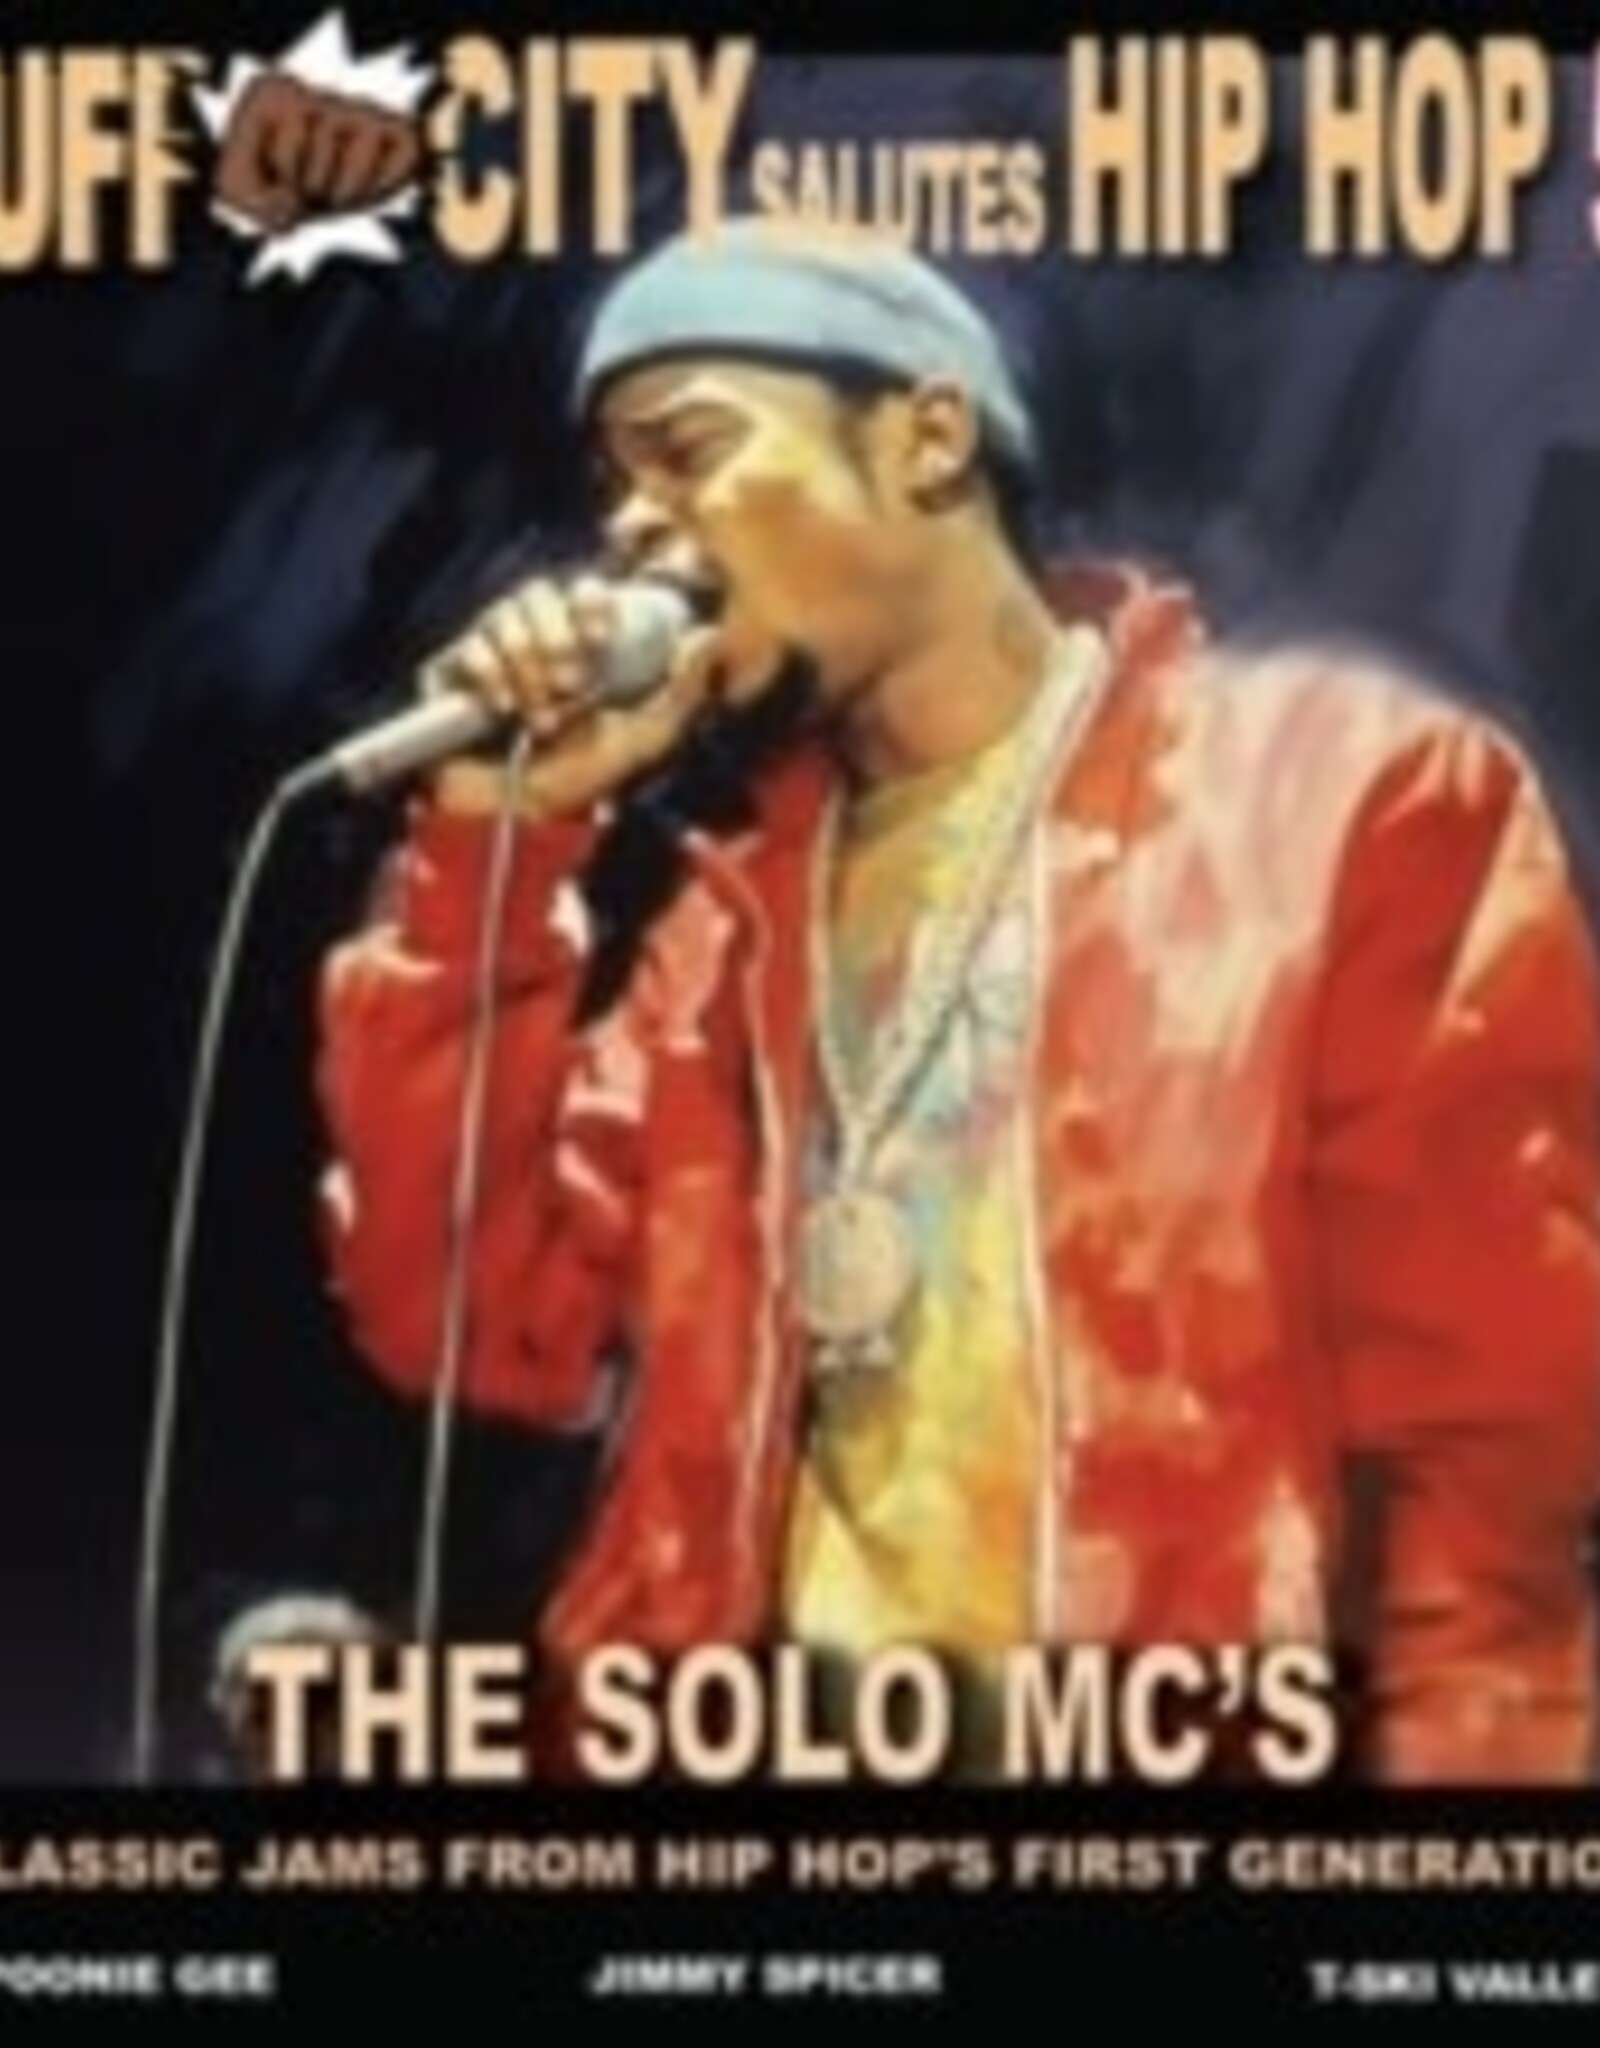 Various Artists - Tuff City Salutes Hip Hop 50: The Solo MC Jams	(RSDBF 2023)